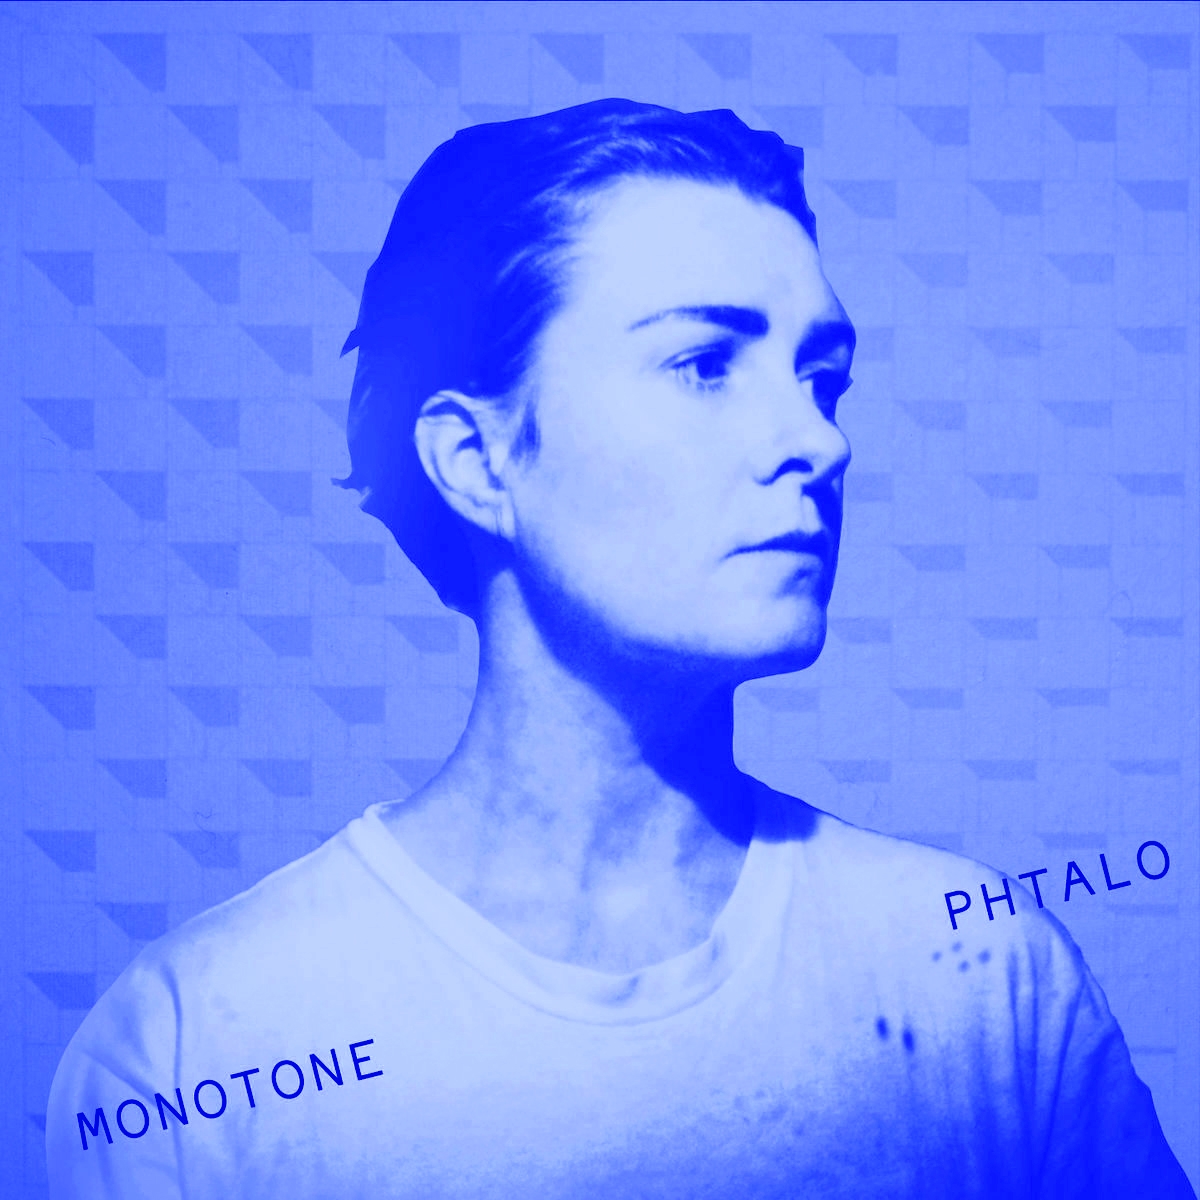 Phtalo: Monotone 